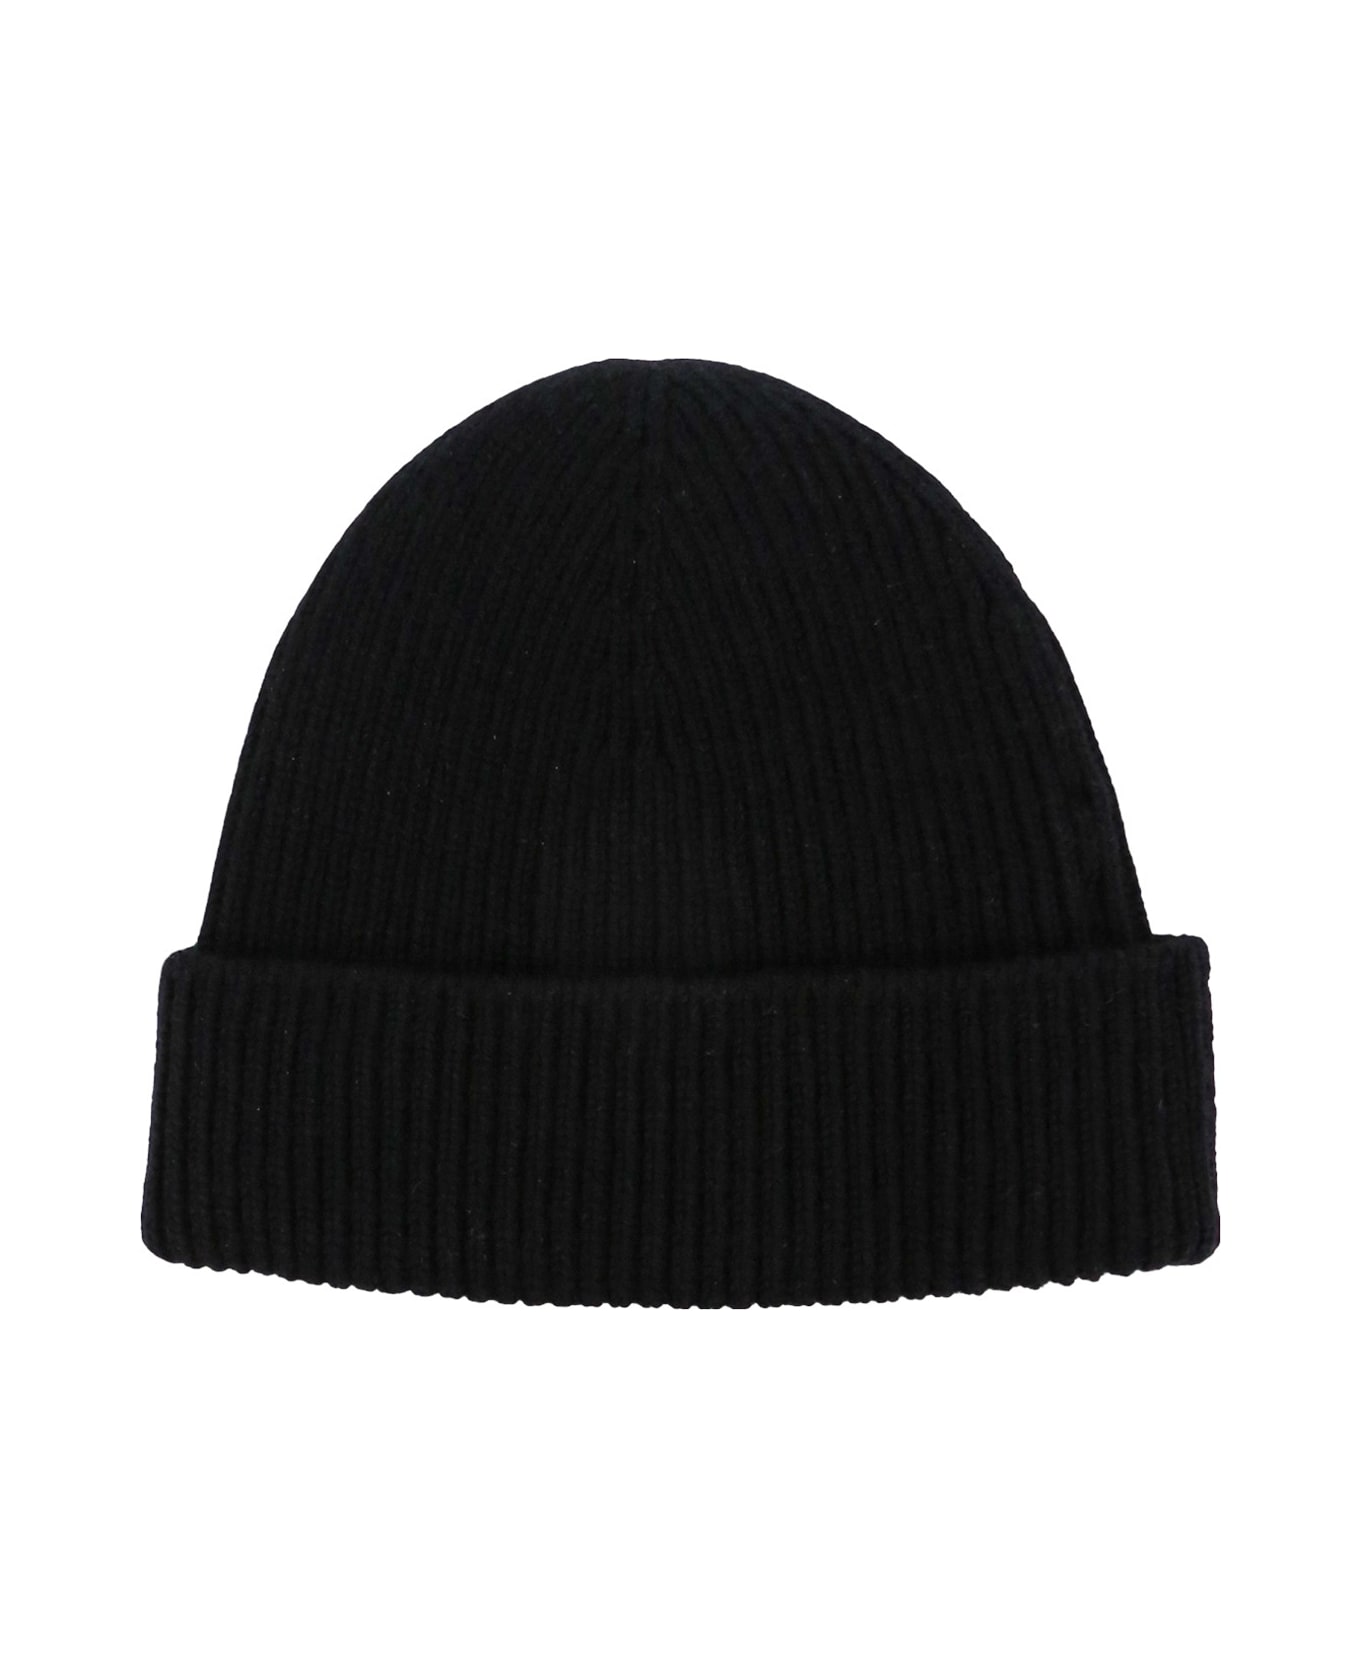 Burberry Ekd Beanie Hat - Black 帽子